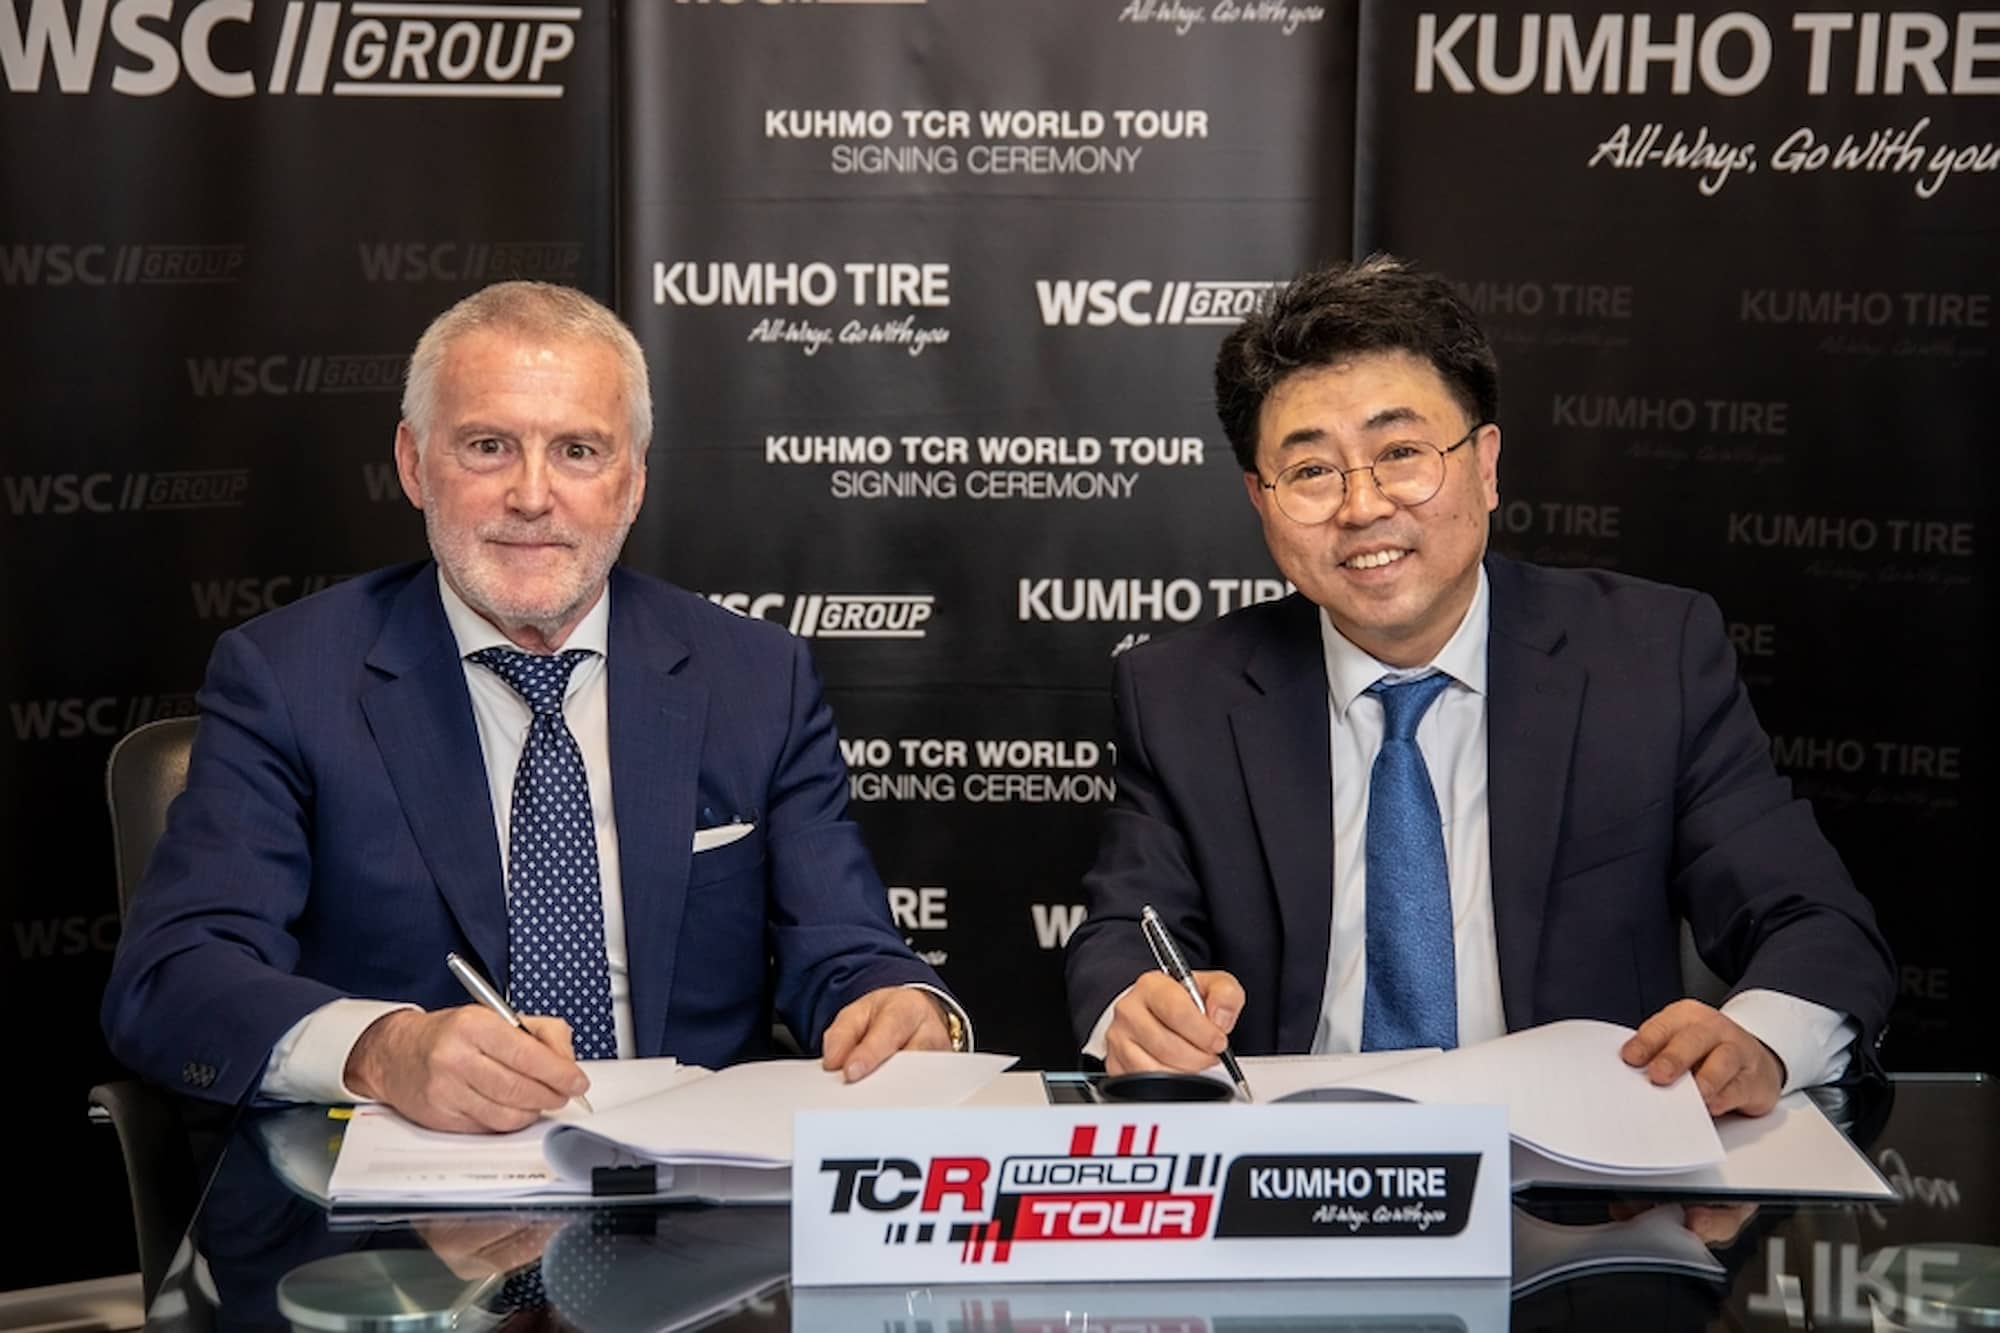 Kumho Tire patrocinador oficial de la nueva competición TCR World Tour